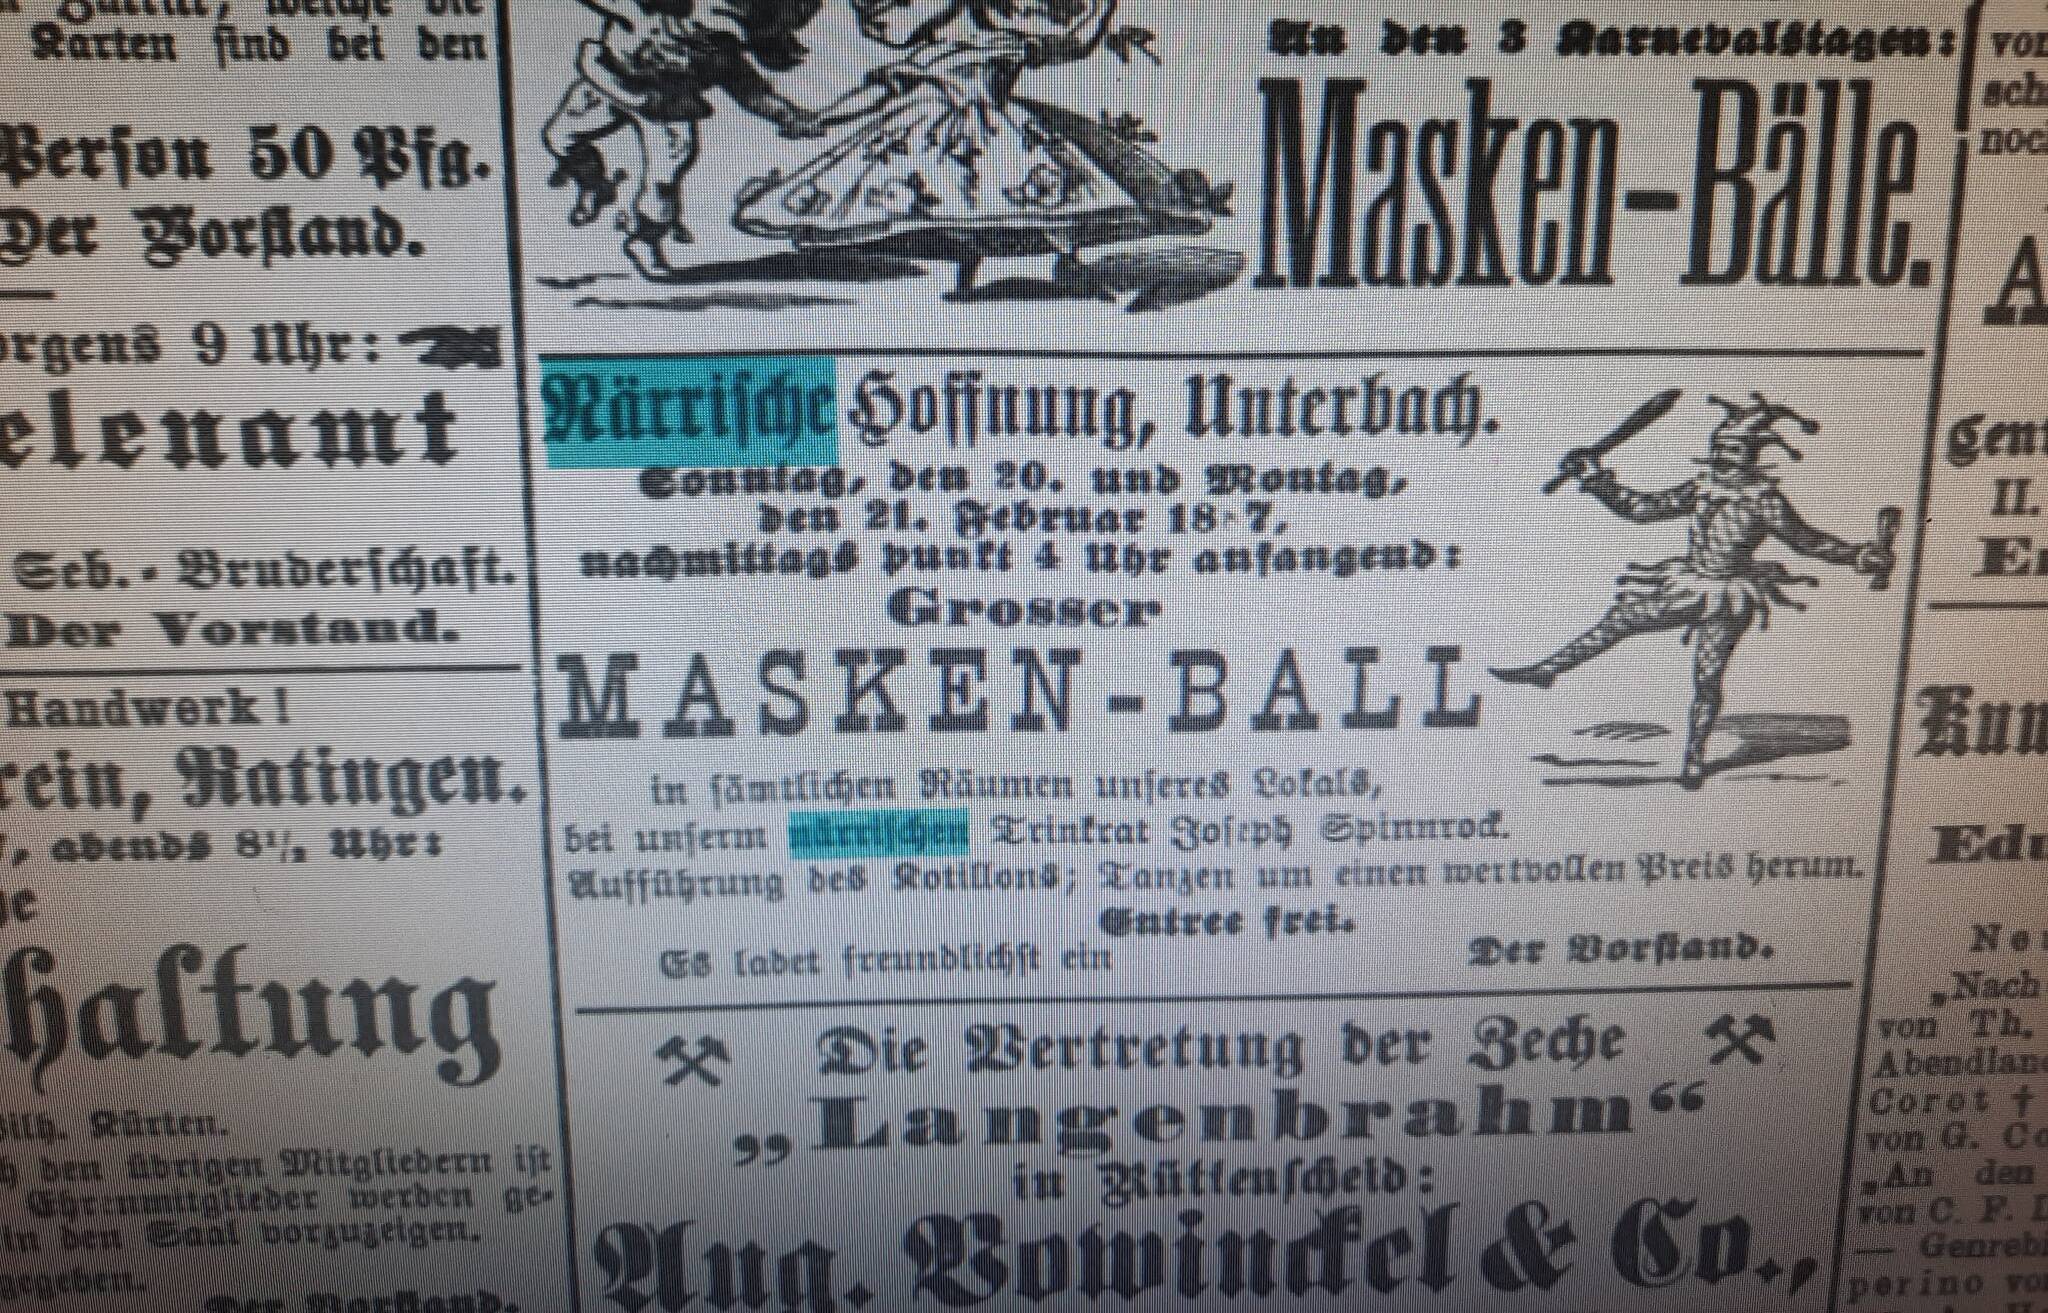 Düsseldorfer Volksblatt vom 20. Februar...